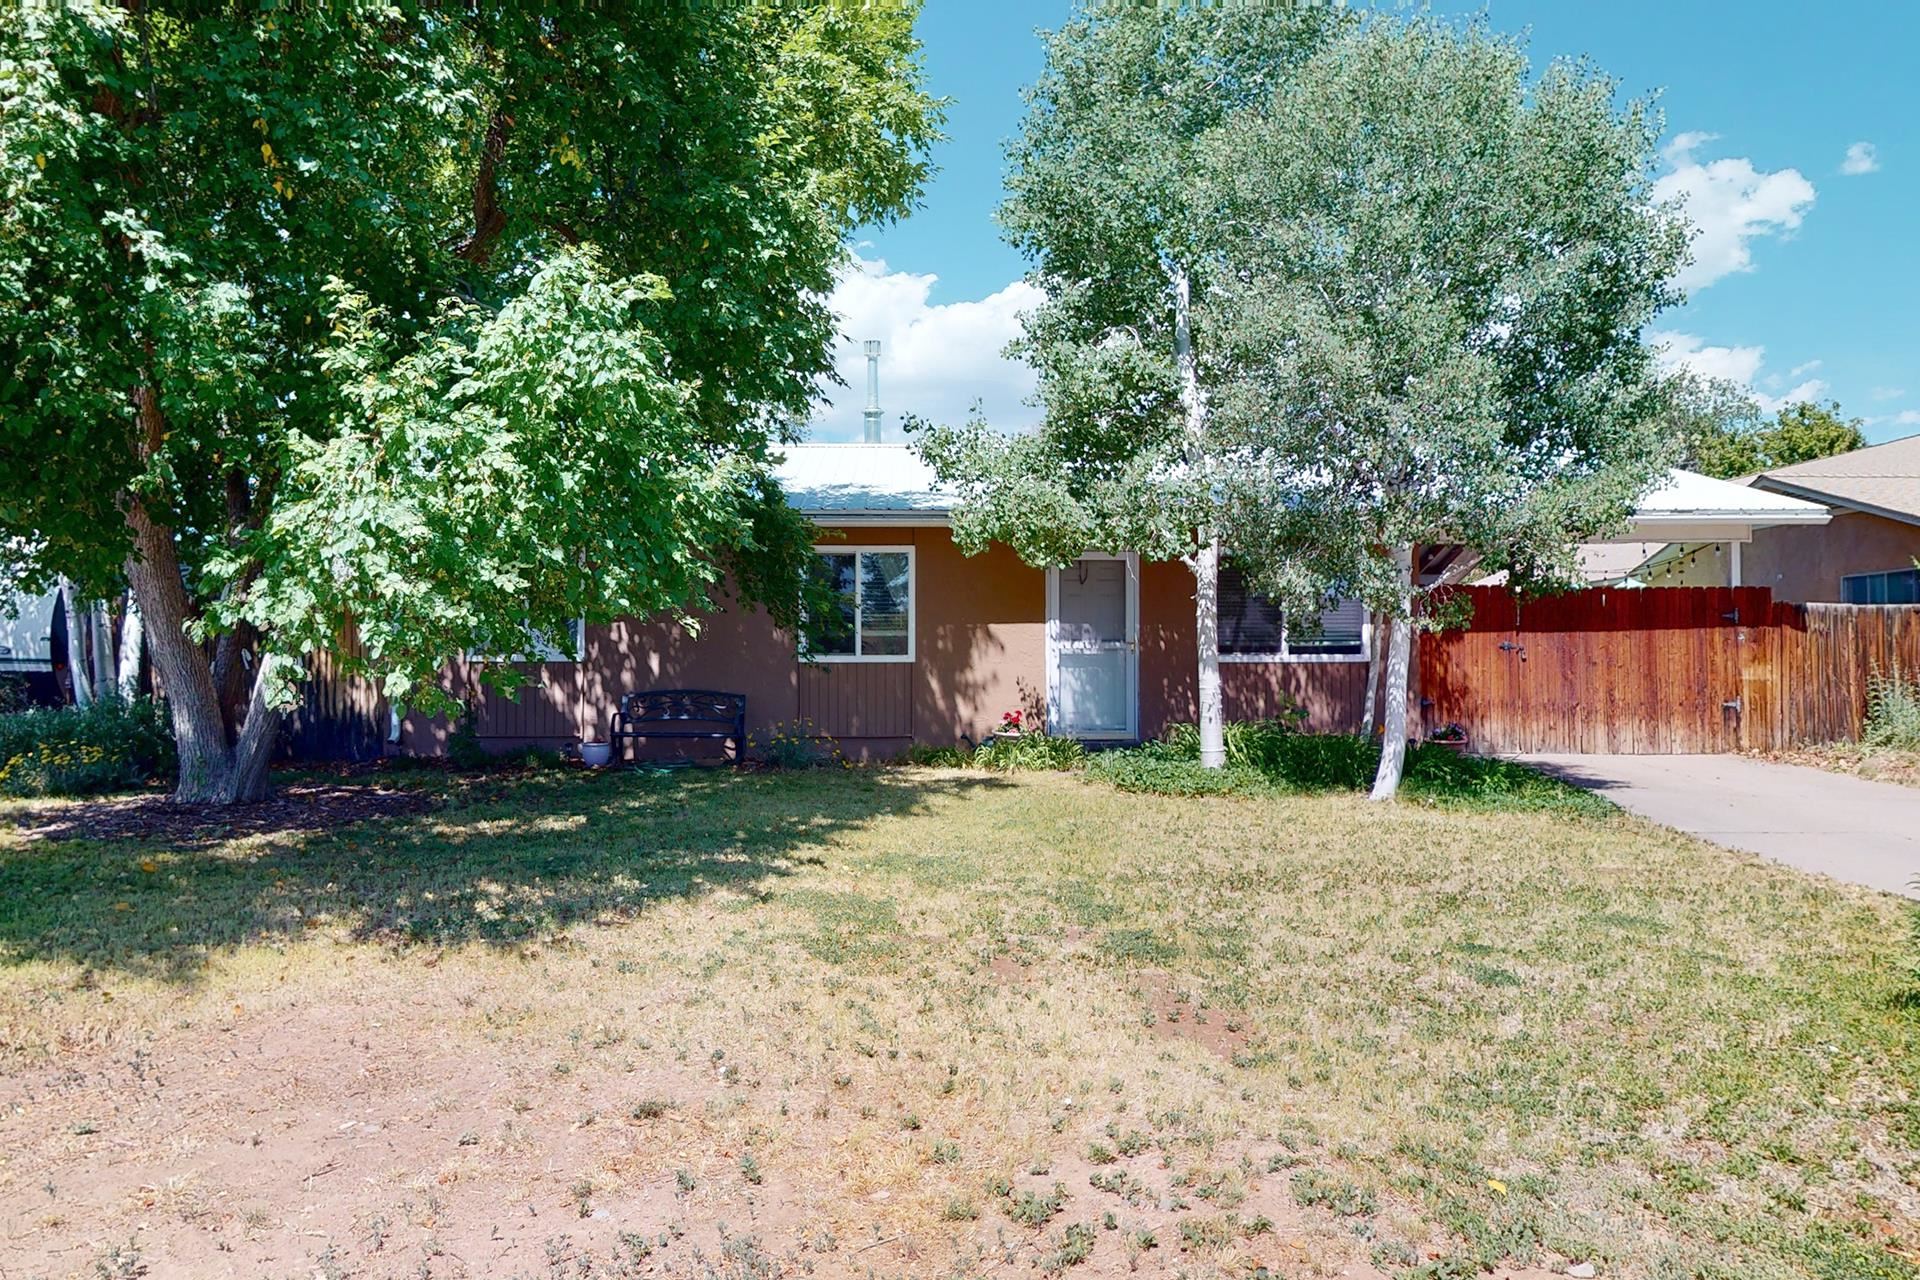 67 JOYA, Los Alamos, New Mexico 87544, 3 Bedrooms Bedrooms, ,1 BathroomBathrooms,Residential,For Sale,67 JOYA,202202195